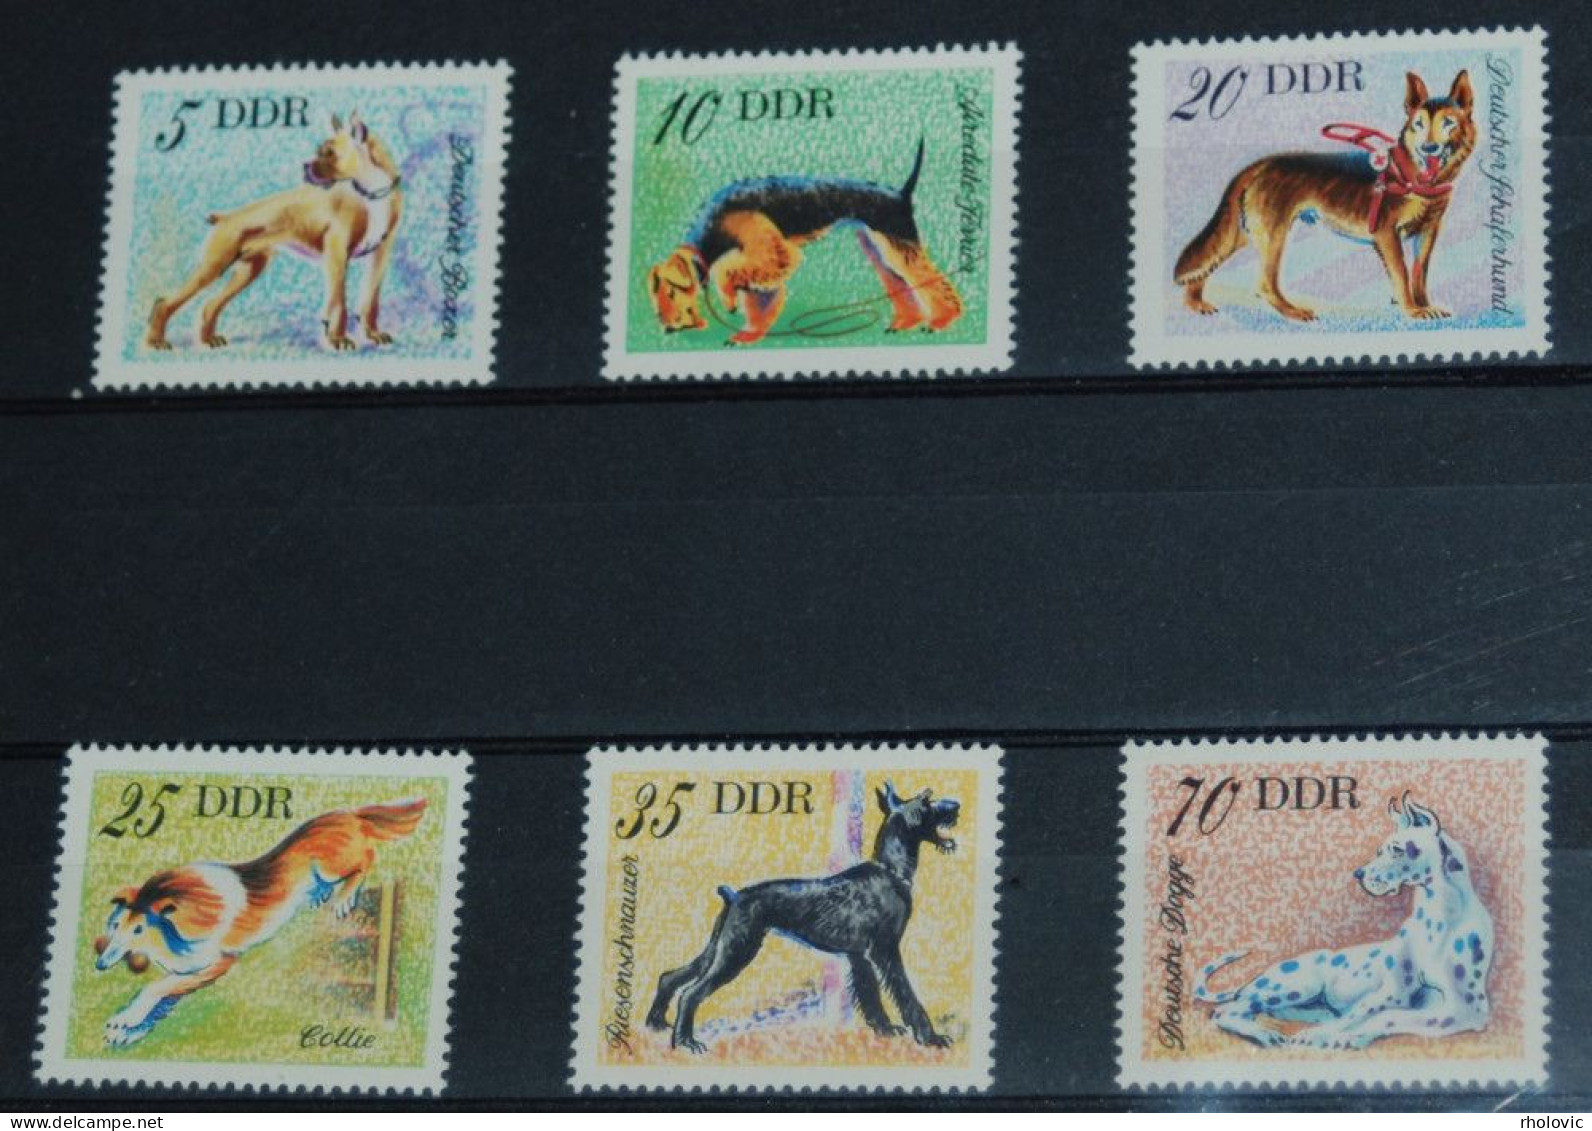 GERMANY DDR 1976, Dogs, Animals, Fauna, Mi #2155-60, MNH** - Dogs